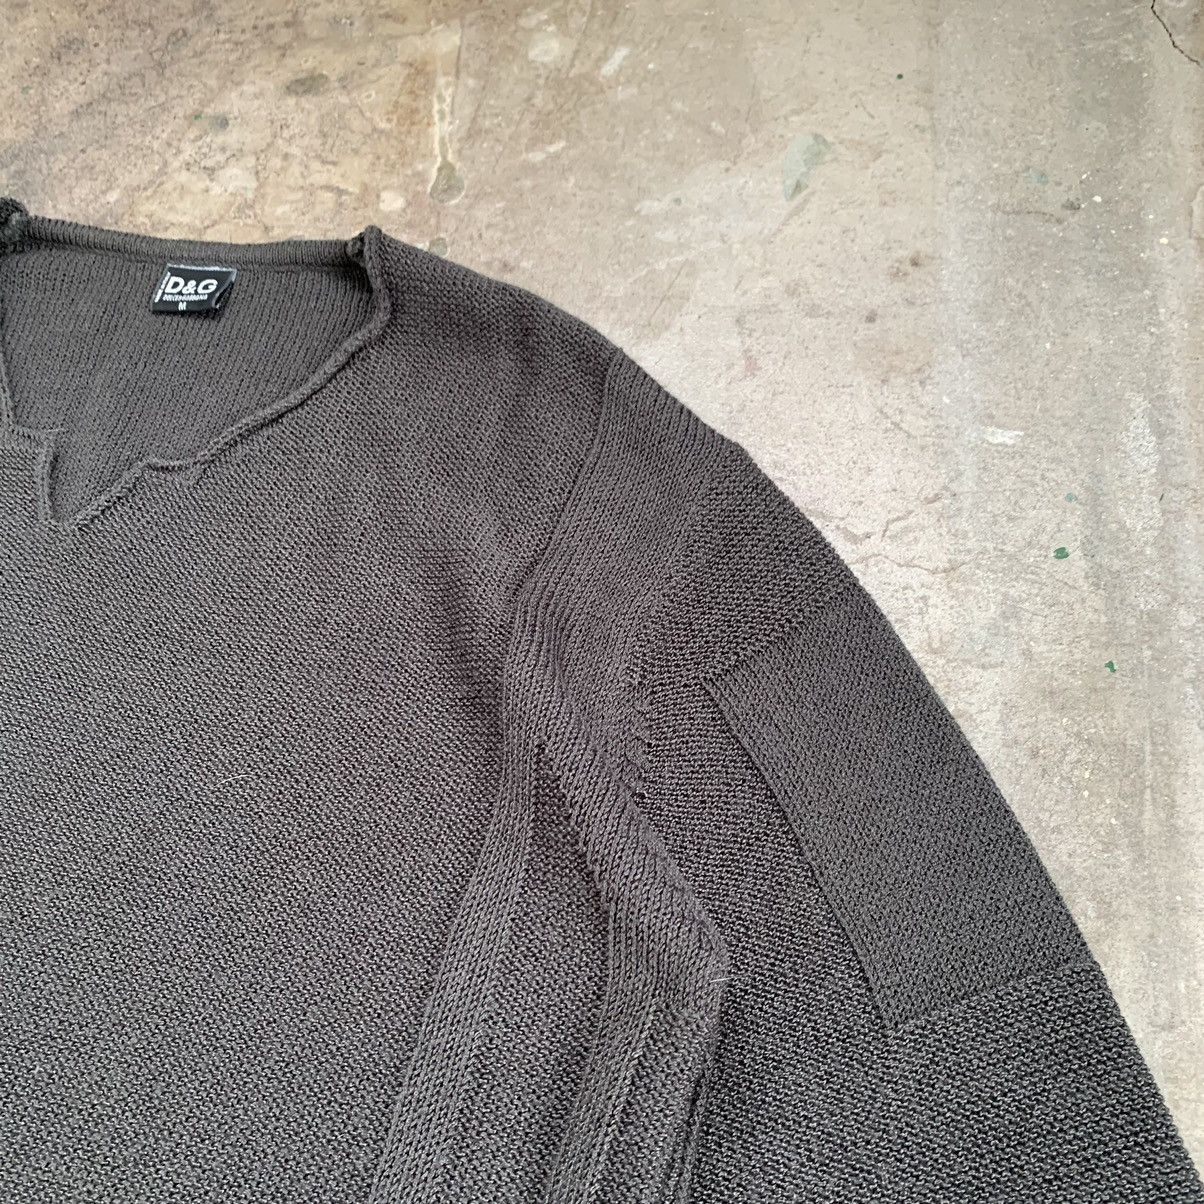 Vintage Dolce and gabbana vintage mesh sweater Size US M / EU 48-50 / 2 - 5 Thumbnail